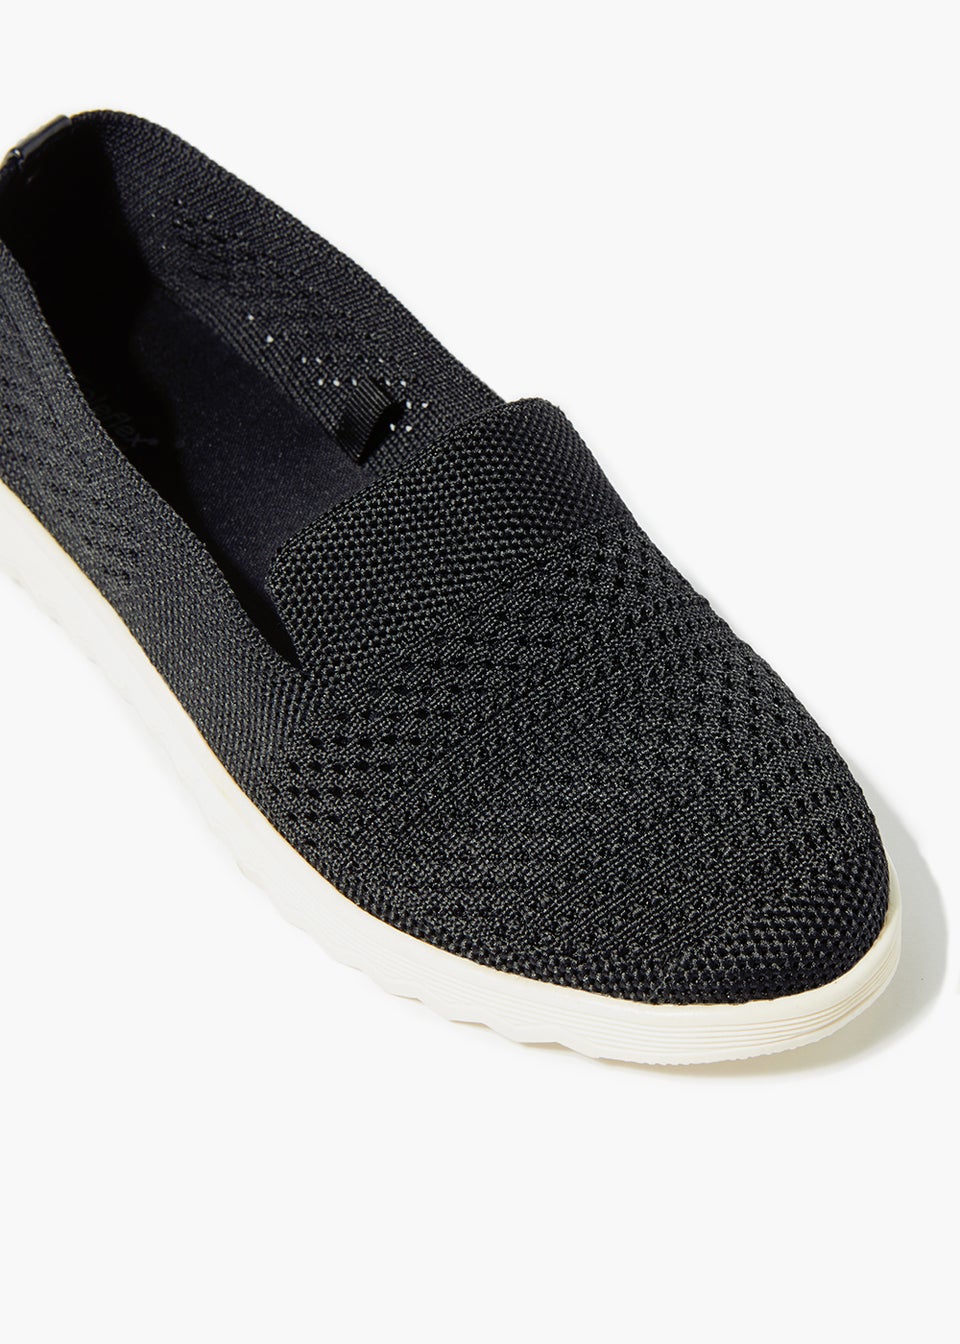 Soleflex Black Knitted Slip On Shoes